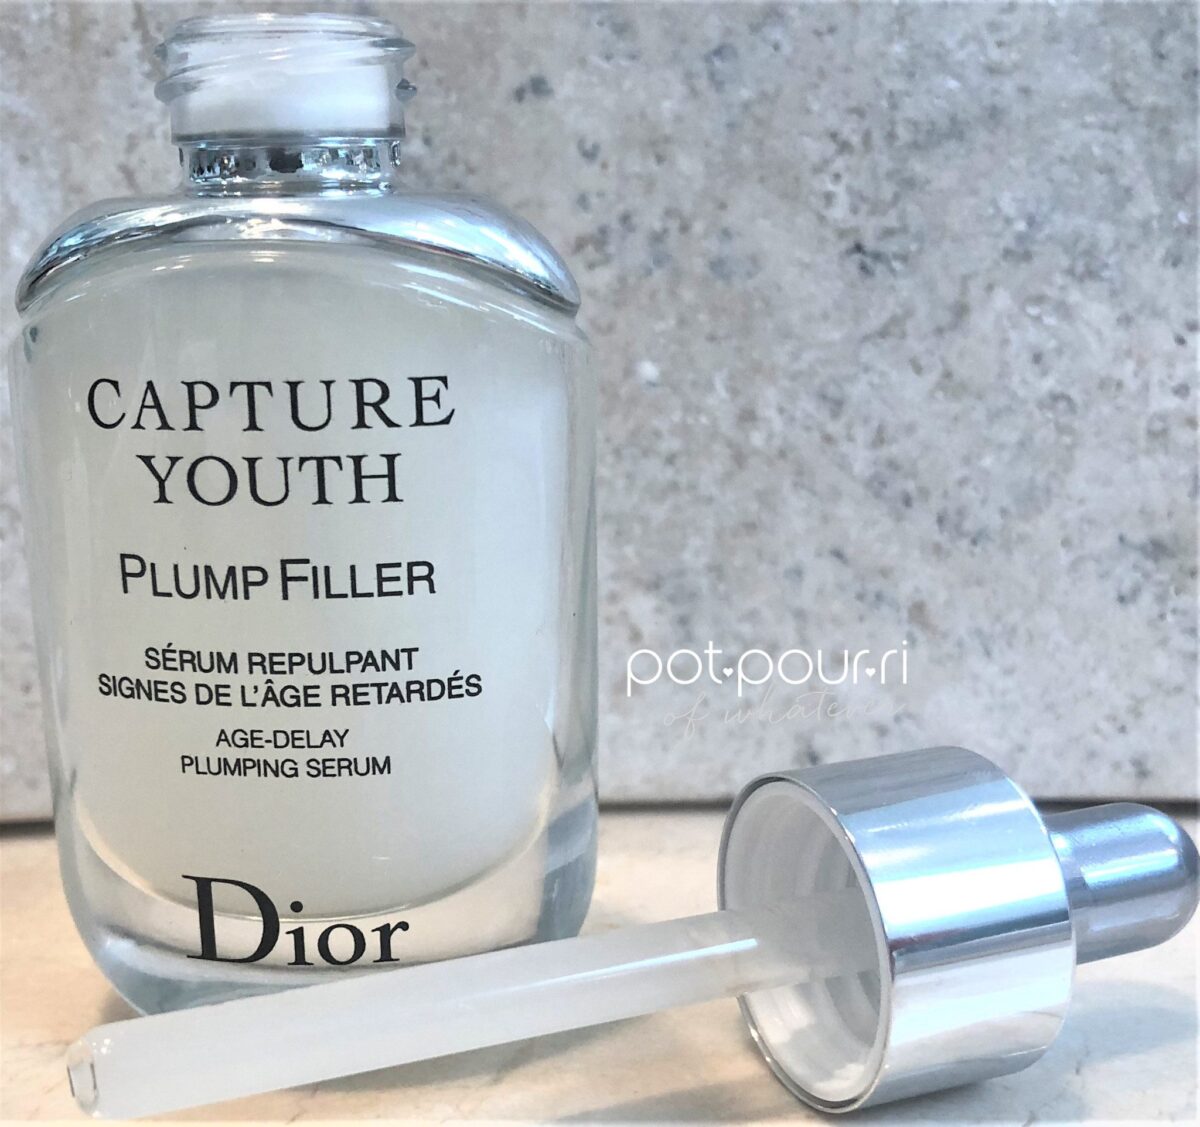 dior capture youth serum plump filler